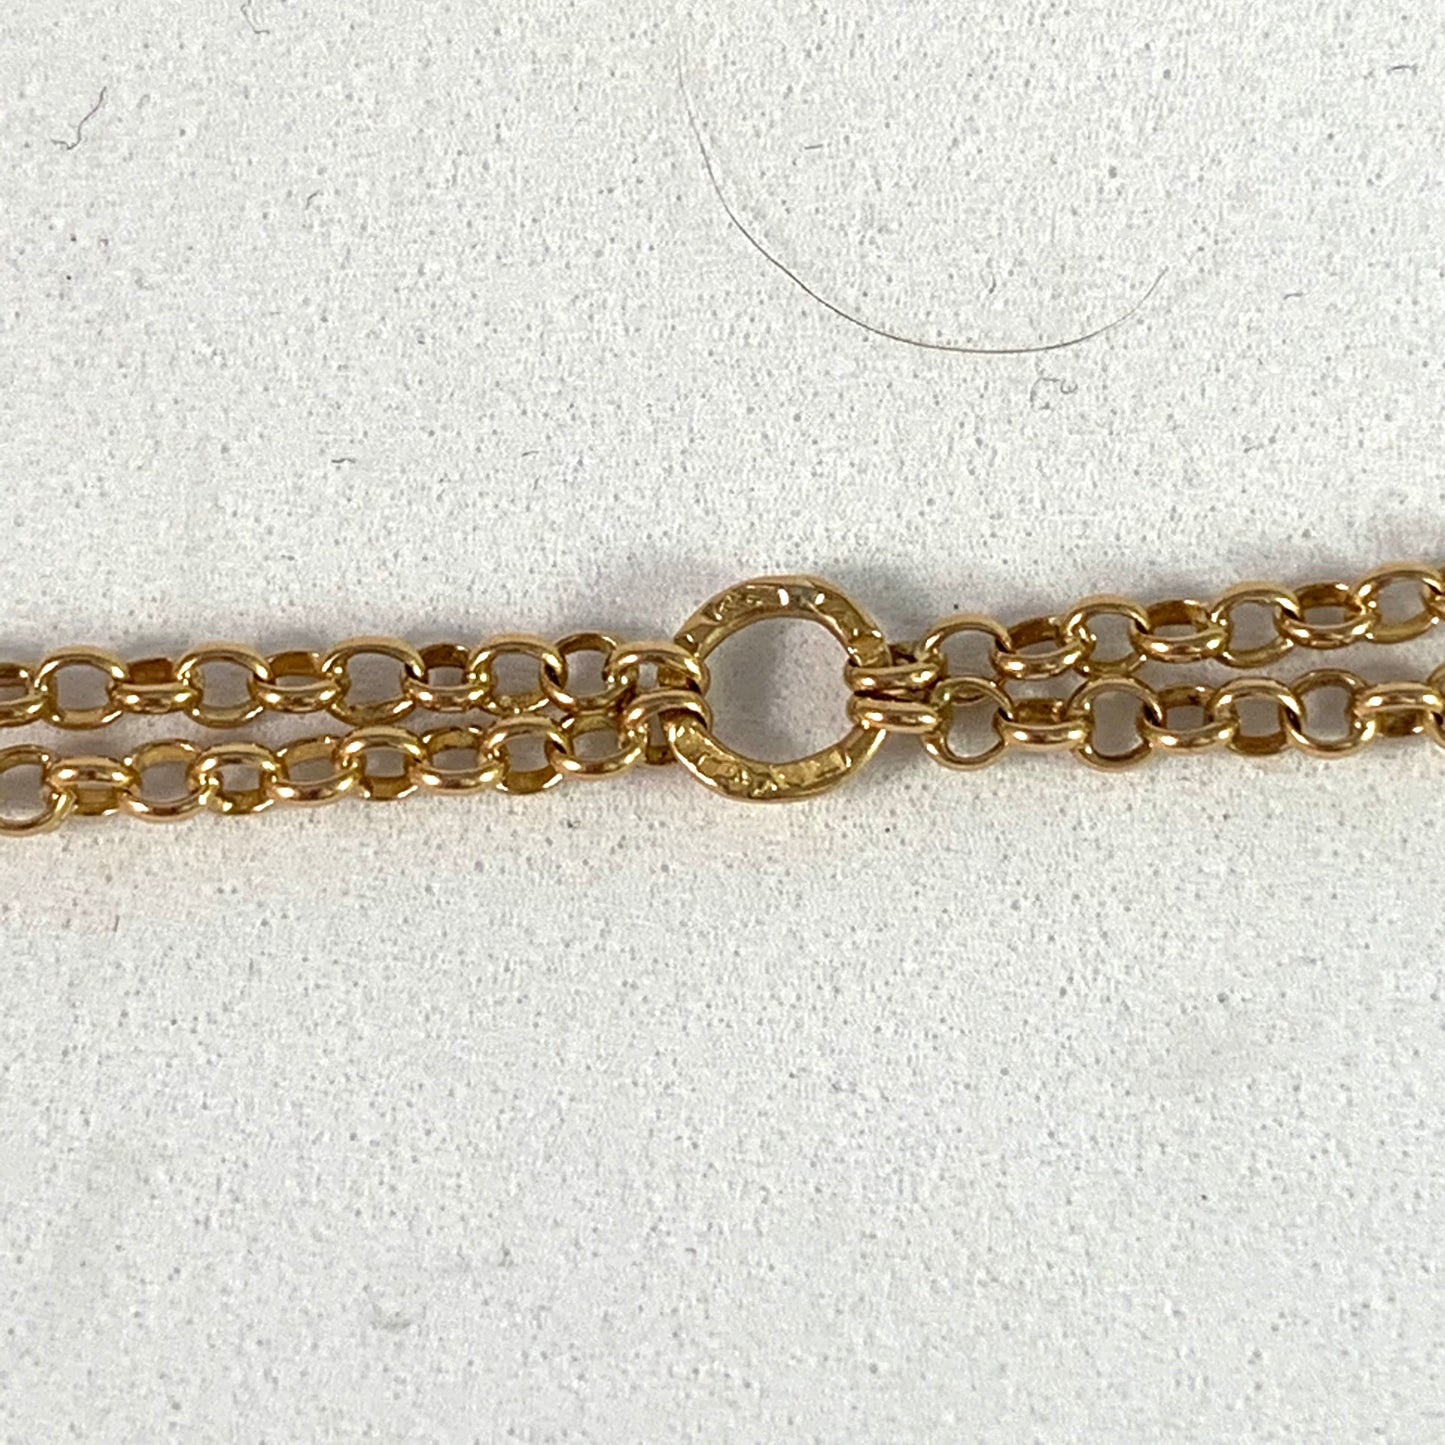 Dahlgren Sweden 1900 Antique 18k Gold Rose Cut Diamond 27.5in Long Two Strand Necklace.